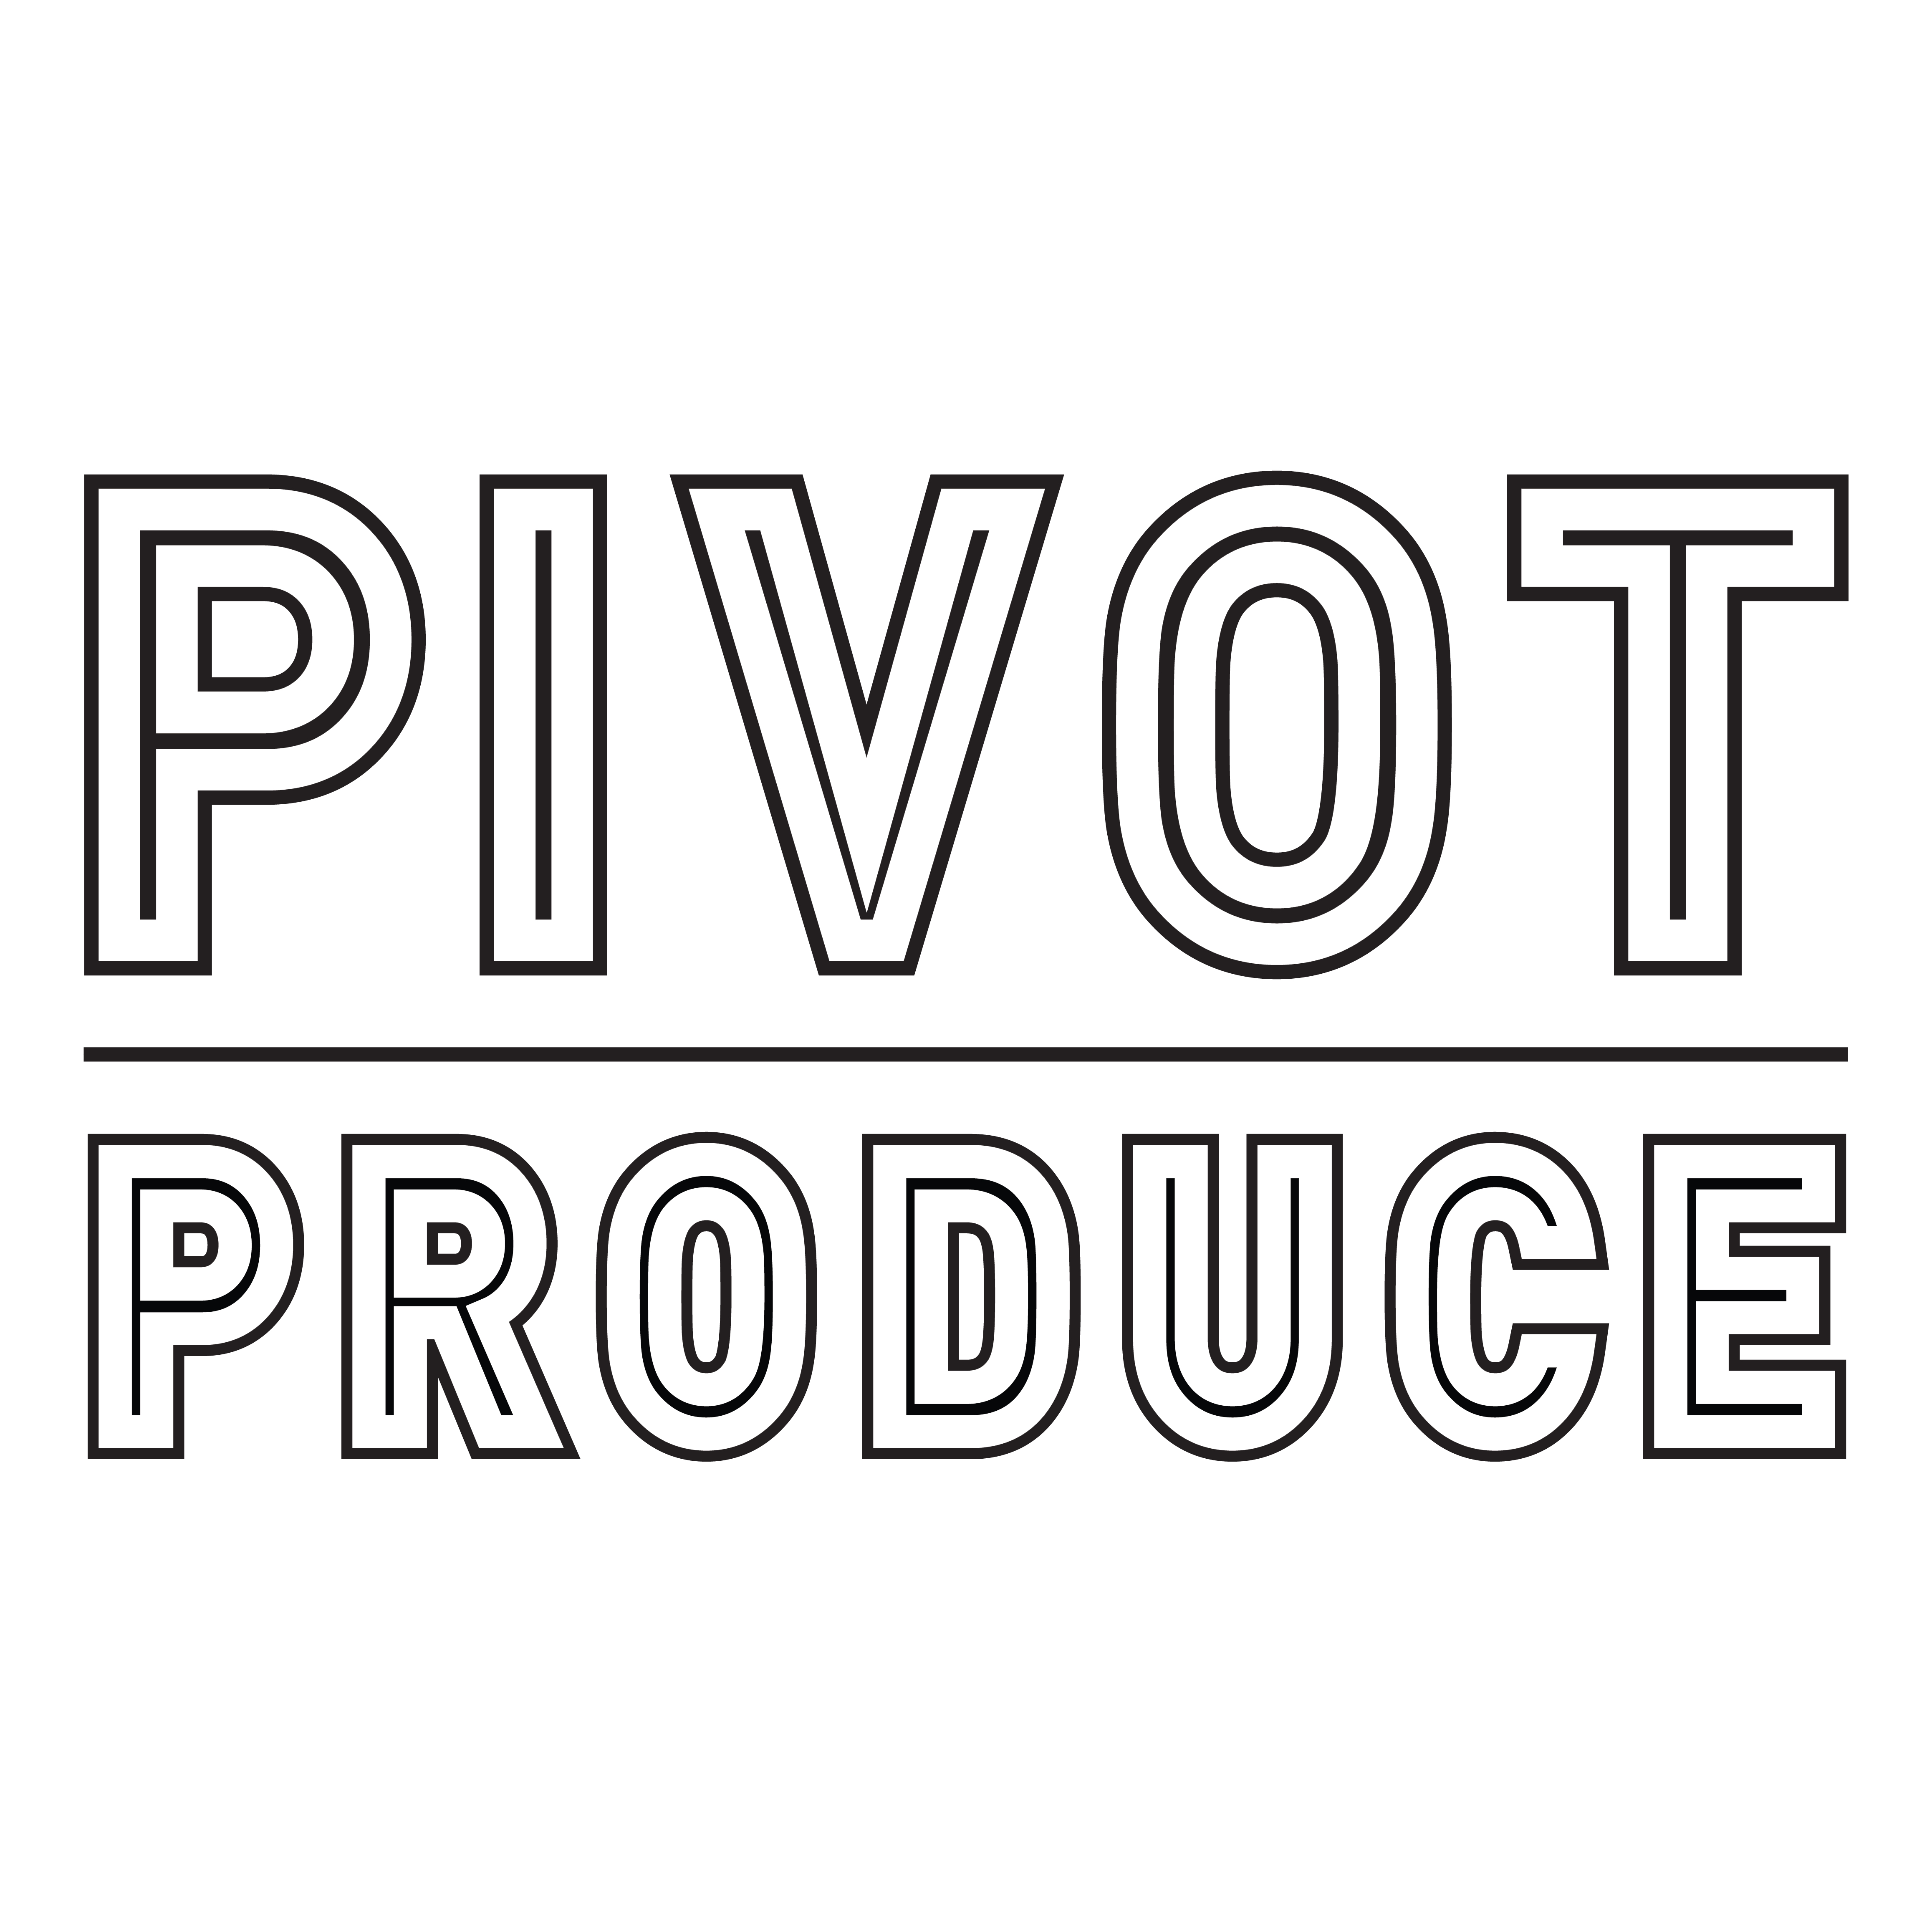 Pivot Produce